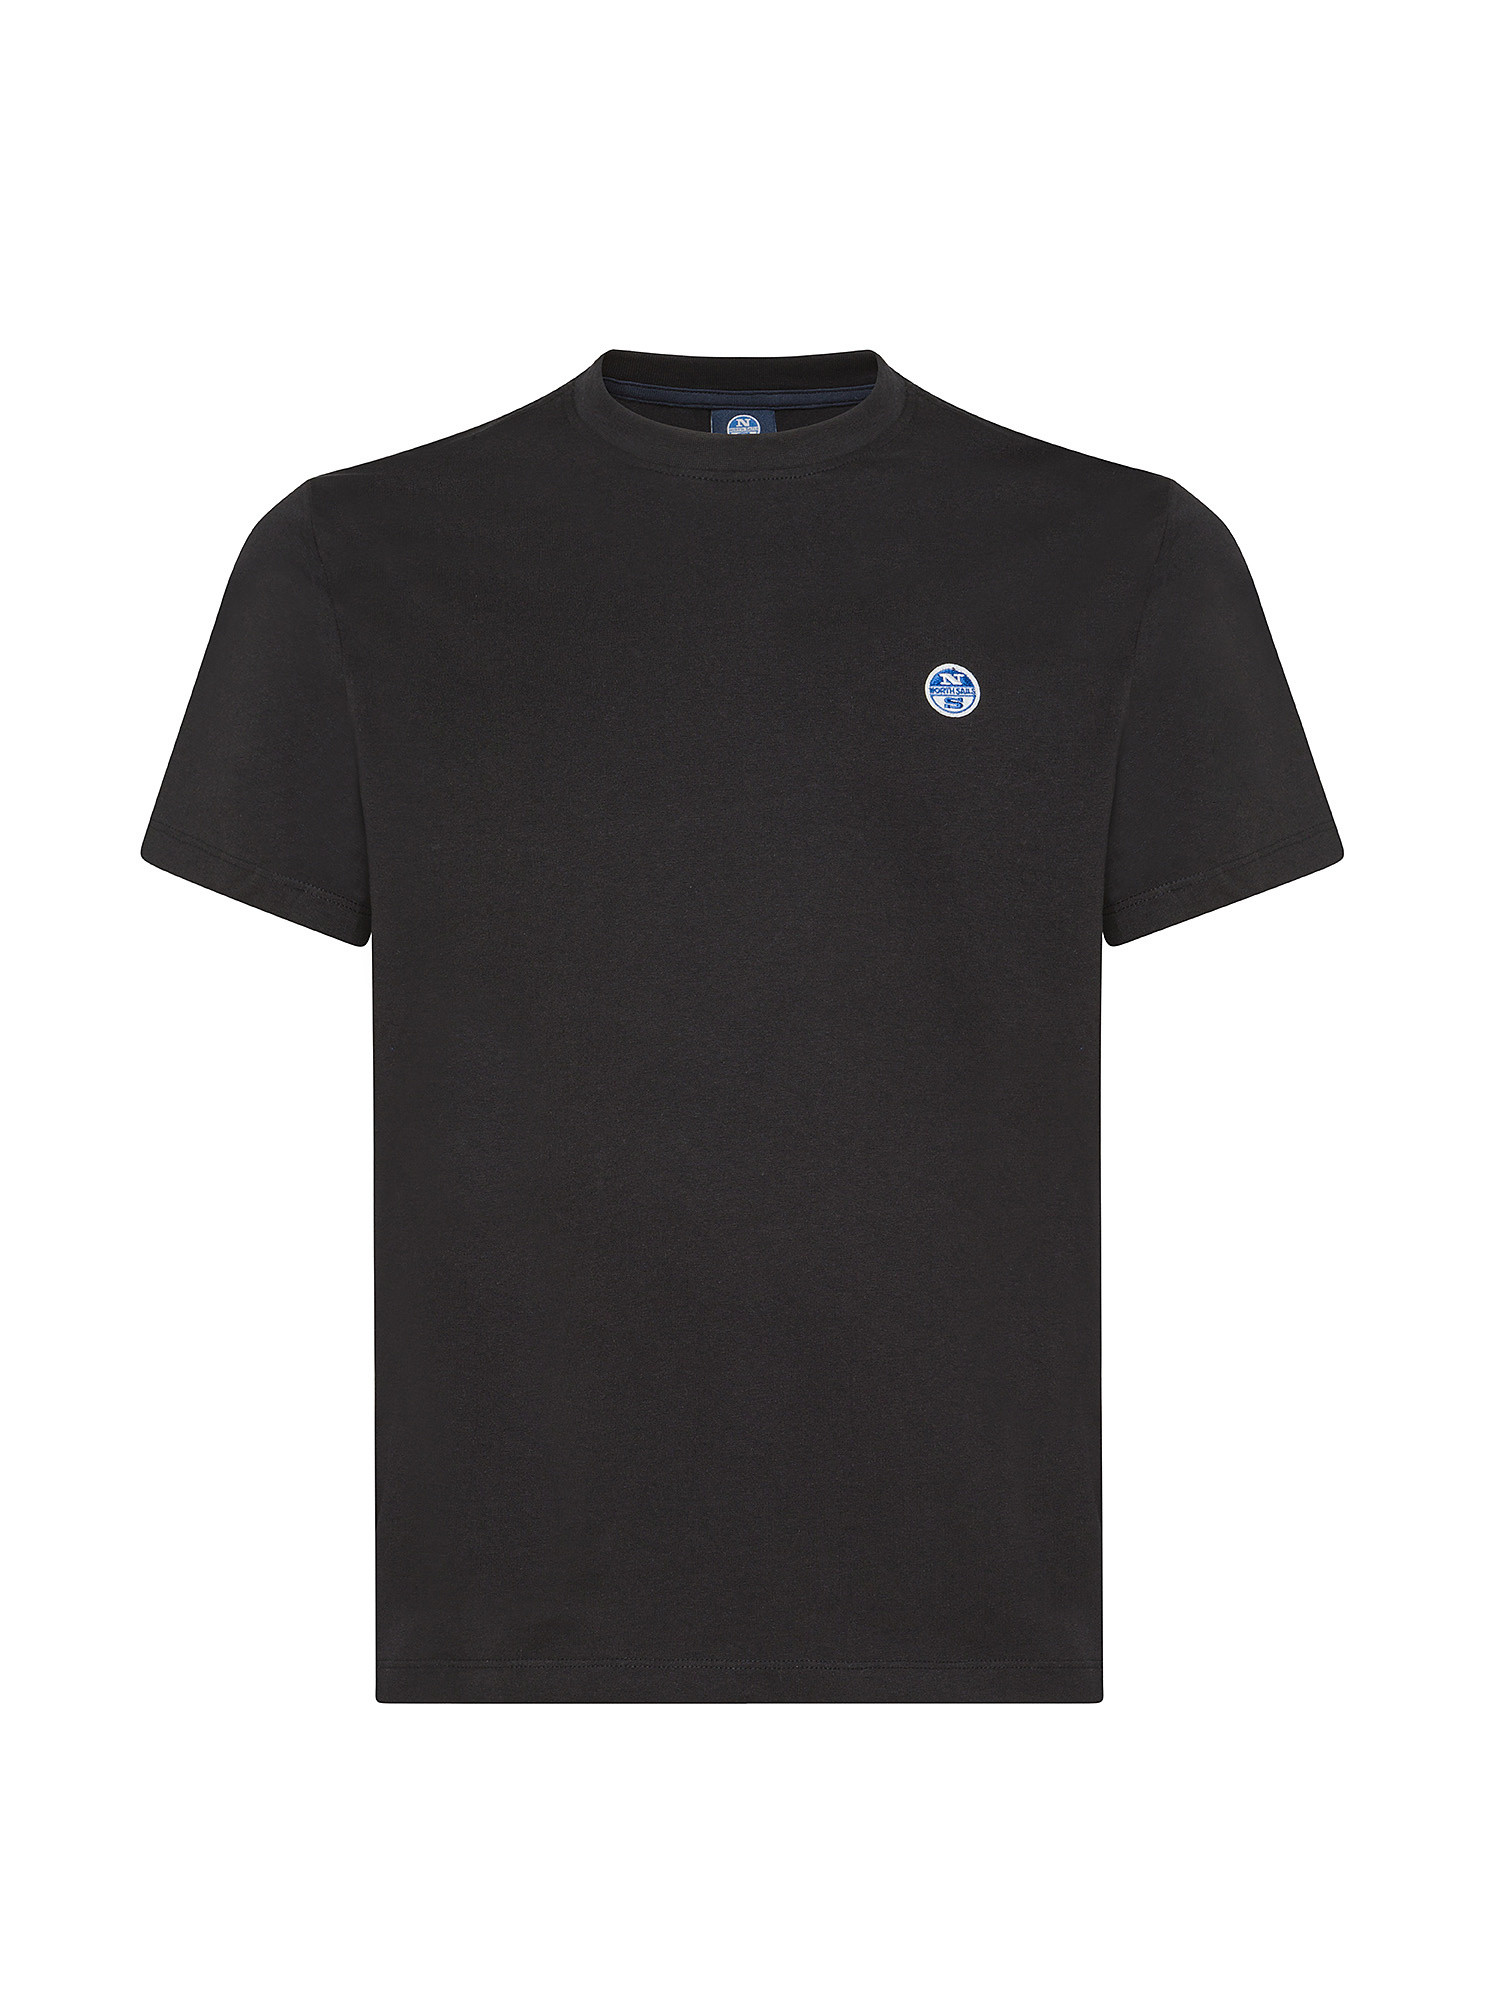 North Sails - T-shirt in jersey di cotone organico con micrologo, Nero, large image number 0